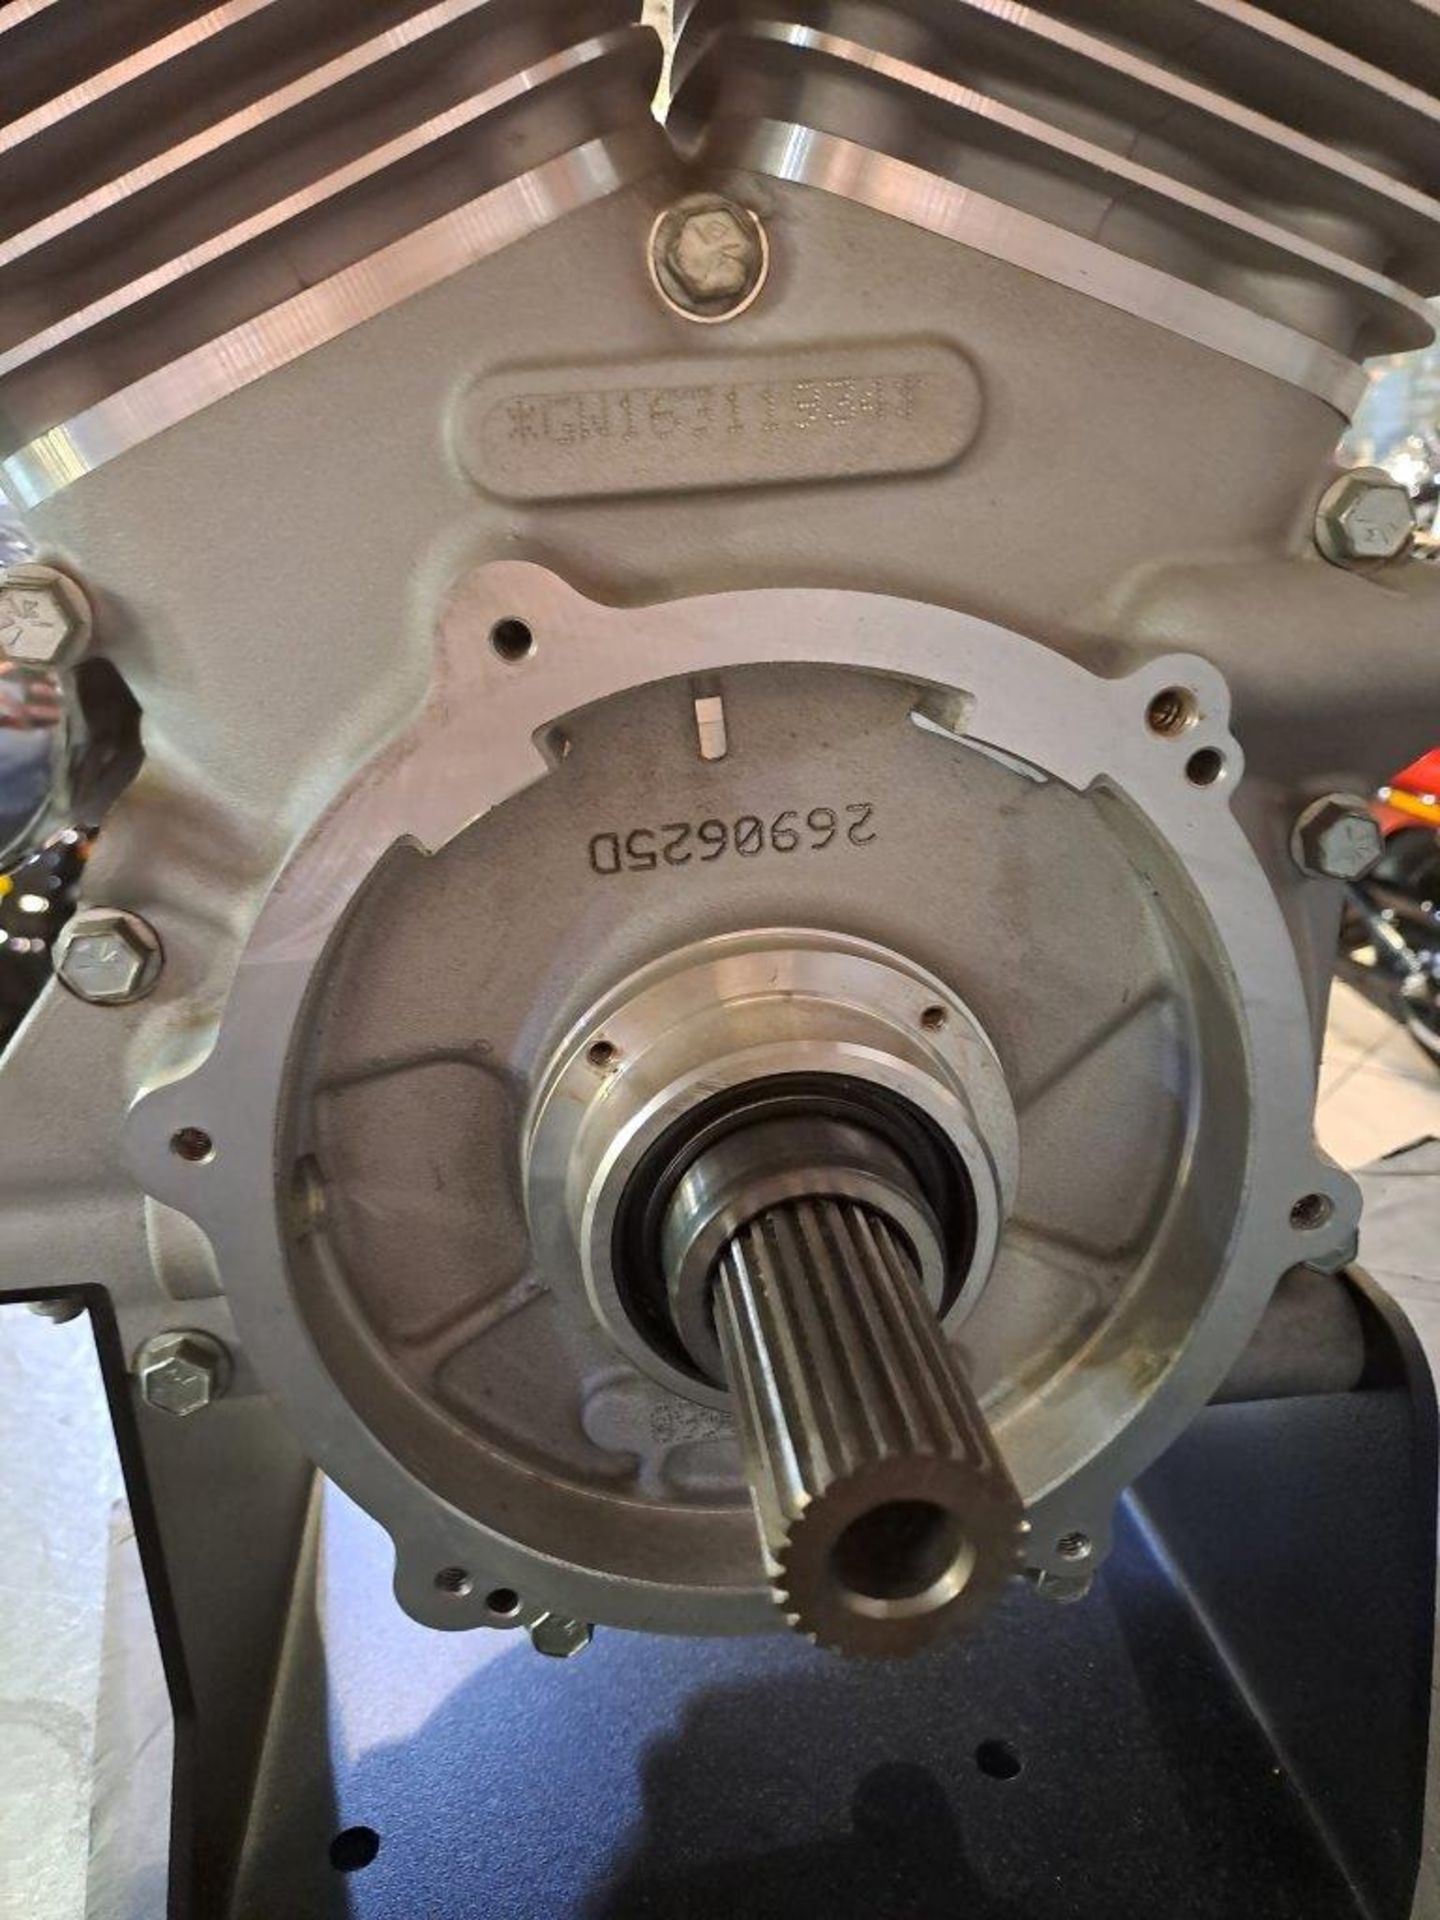 Harley Davidson Engine, on display Stand - Image 4 of 6